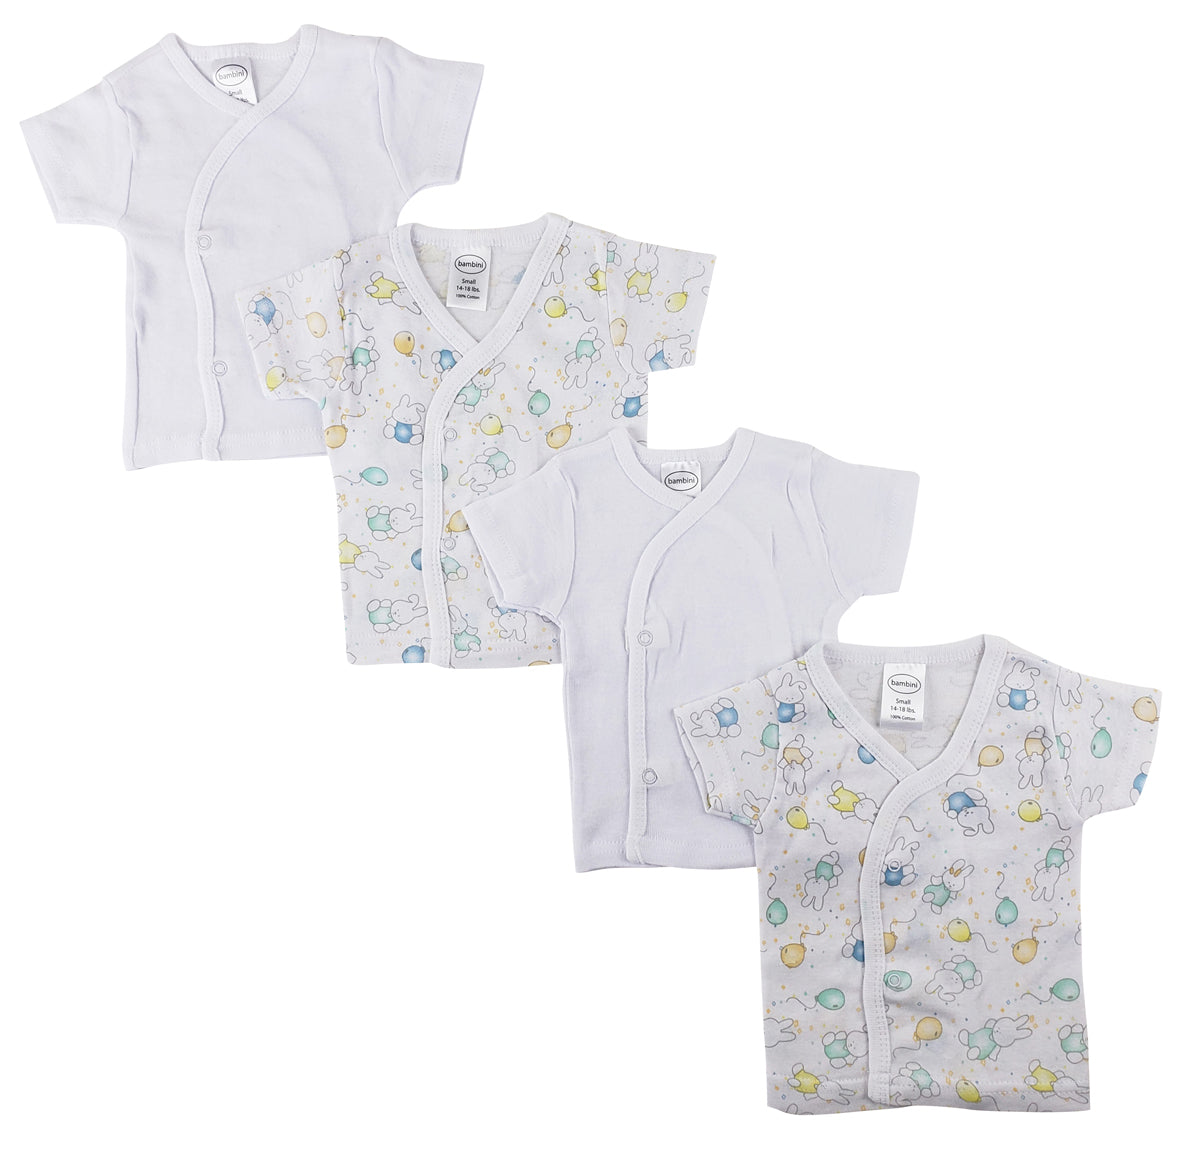 Infant Side Snap Short Sleeve Shirt - 4 Pack NC_0202